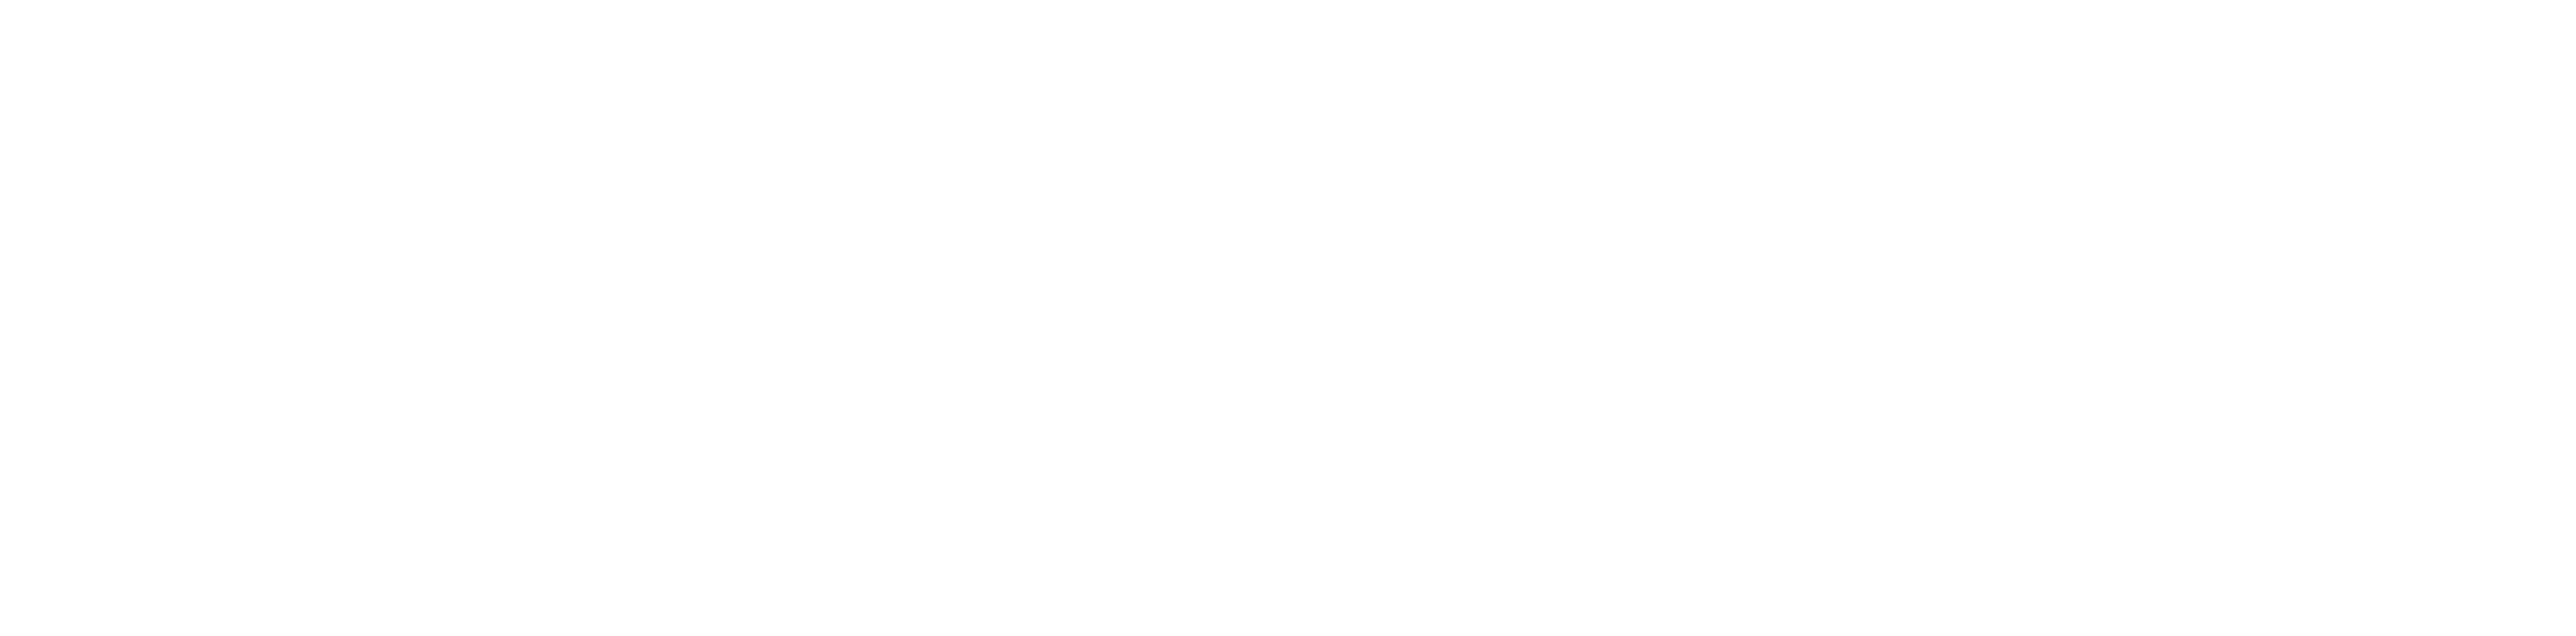 hci group logo-white